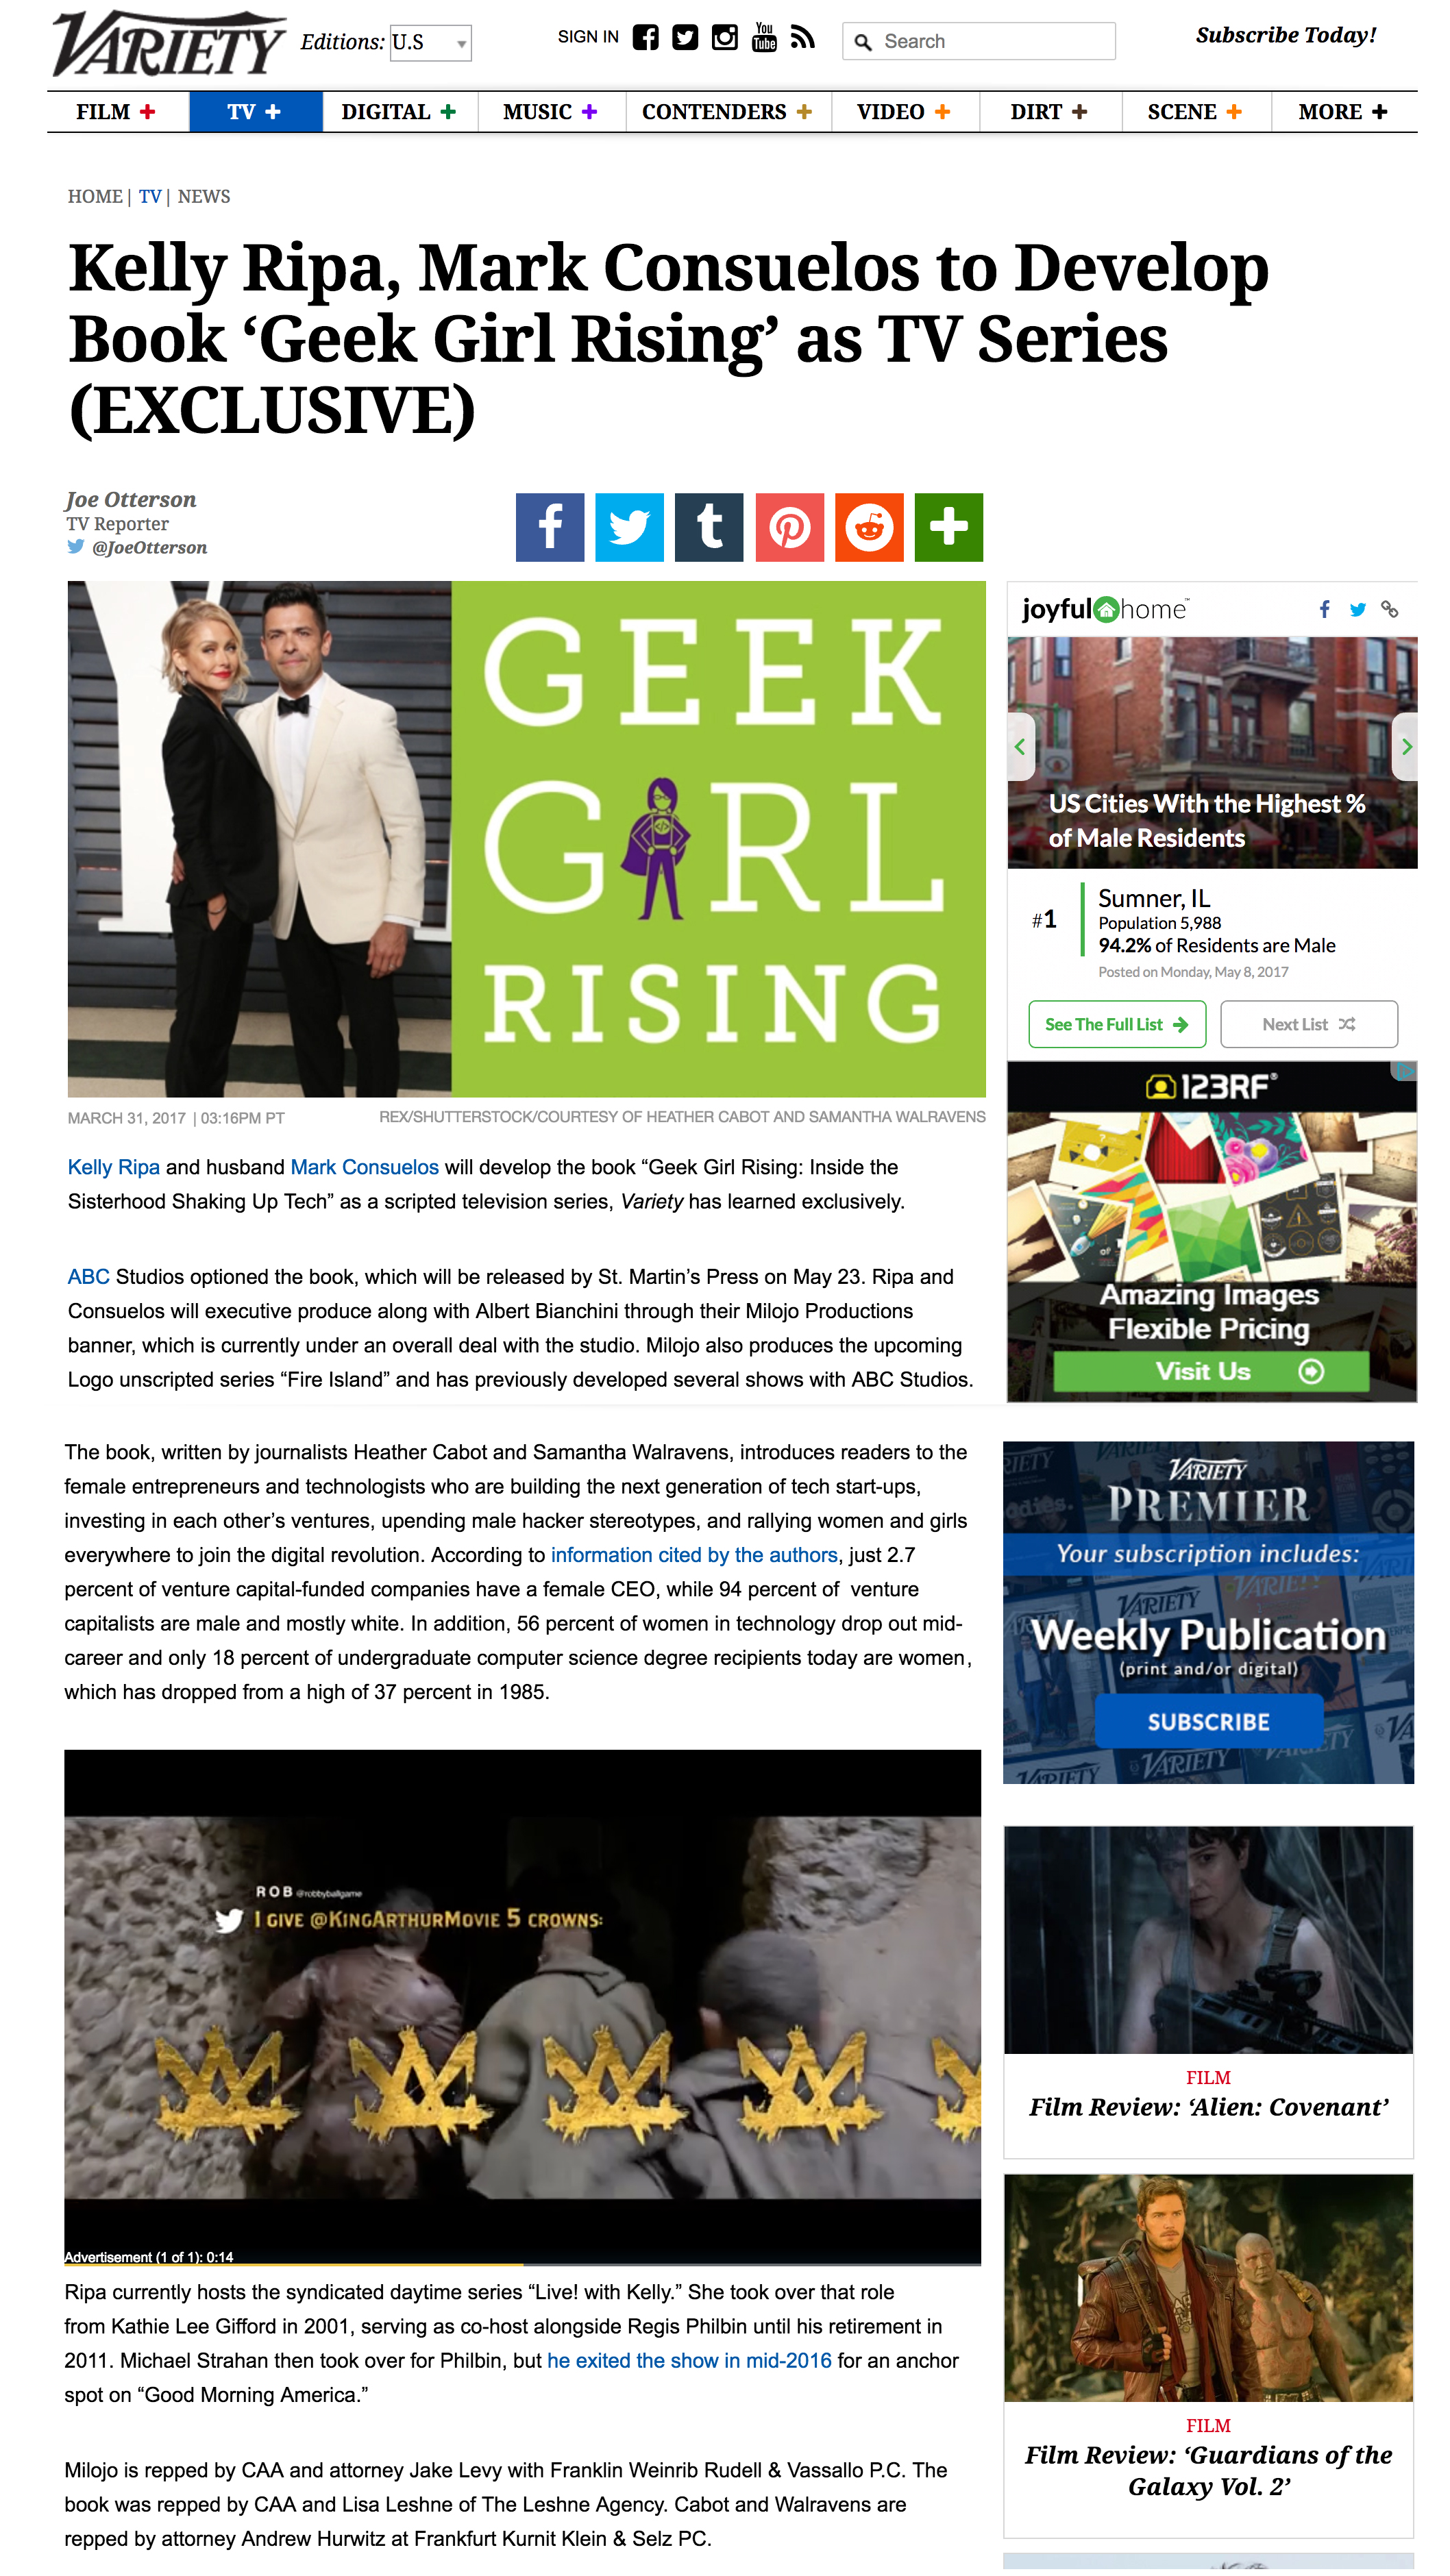 Kelly Ripa, Mark Consuelos to Develop Book ‘Geek Girl Rising’ as TV Series